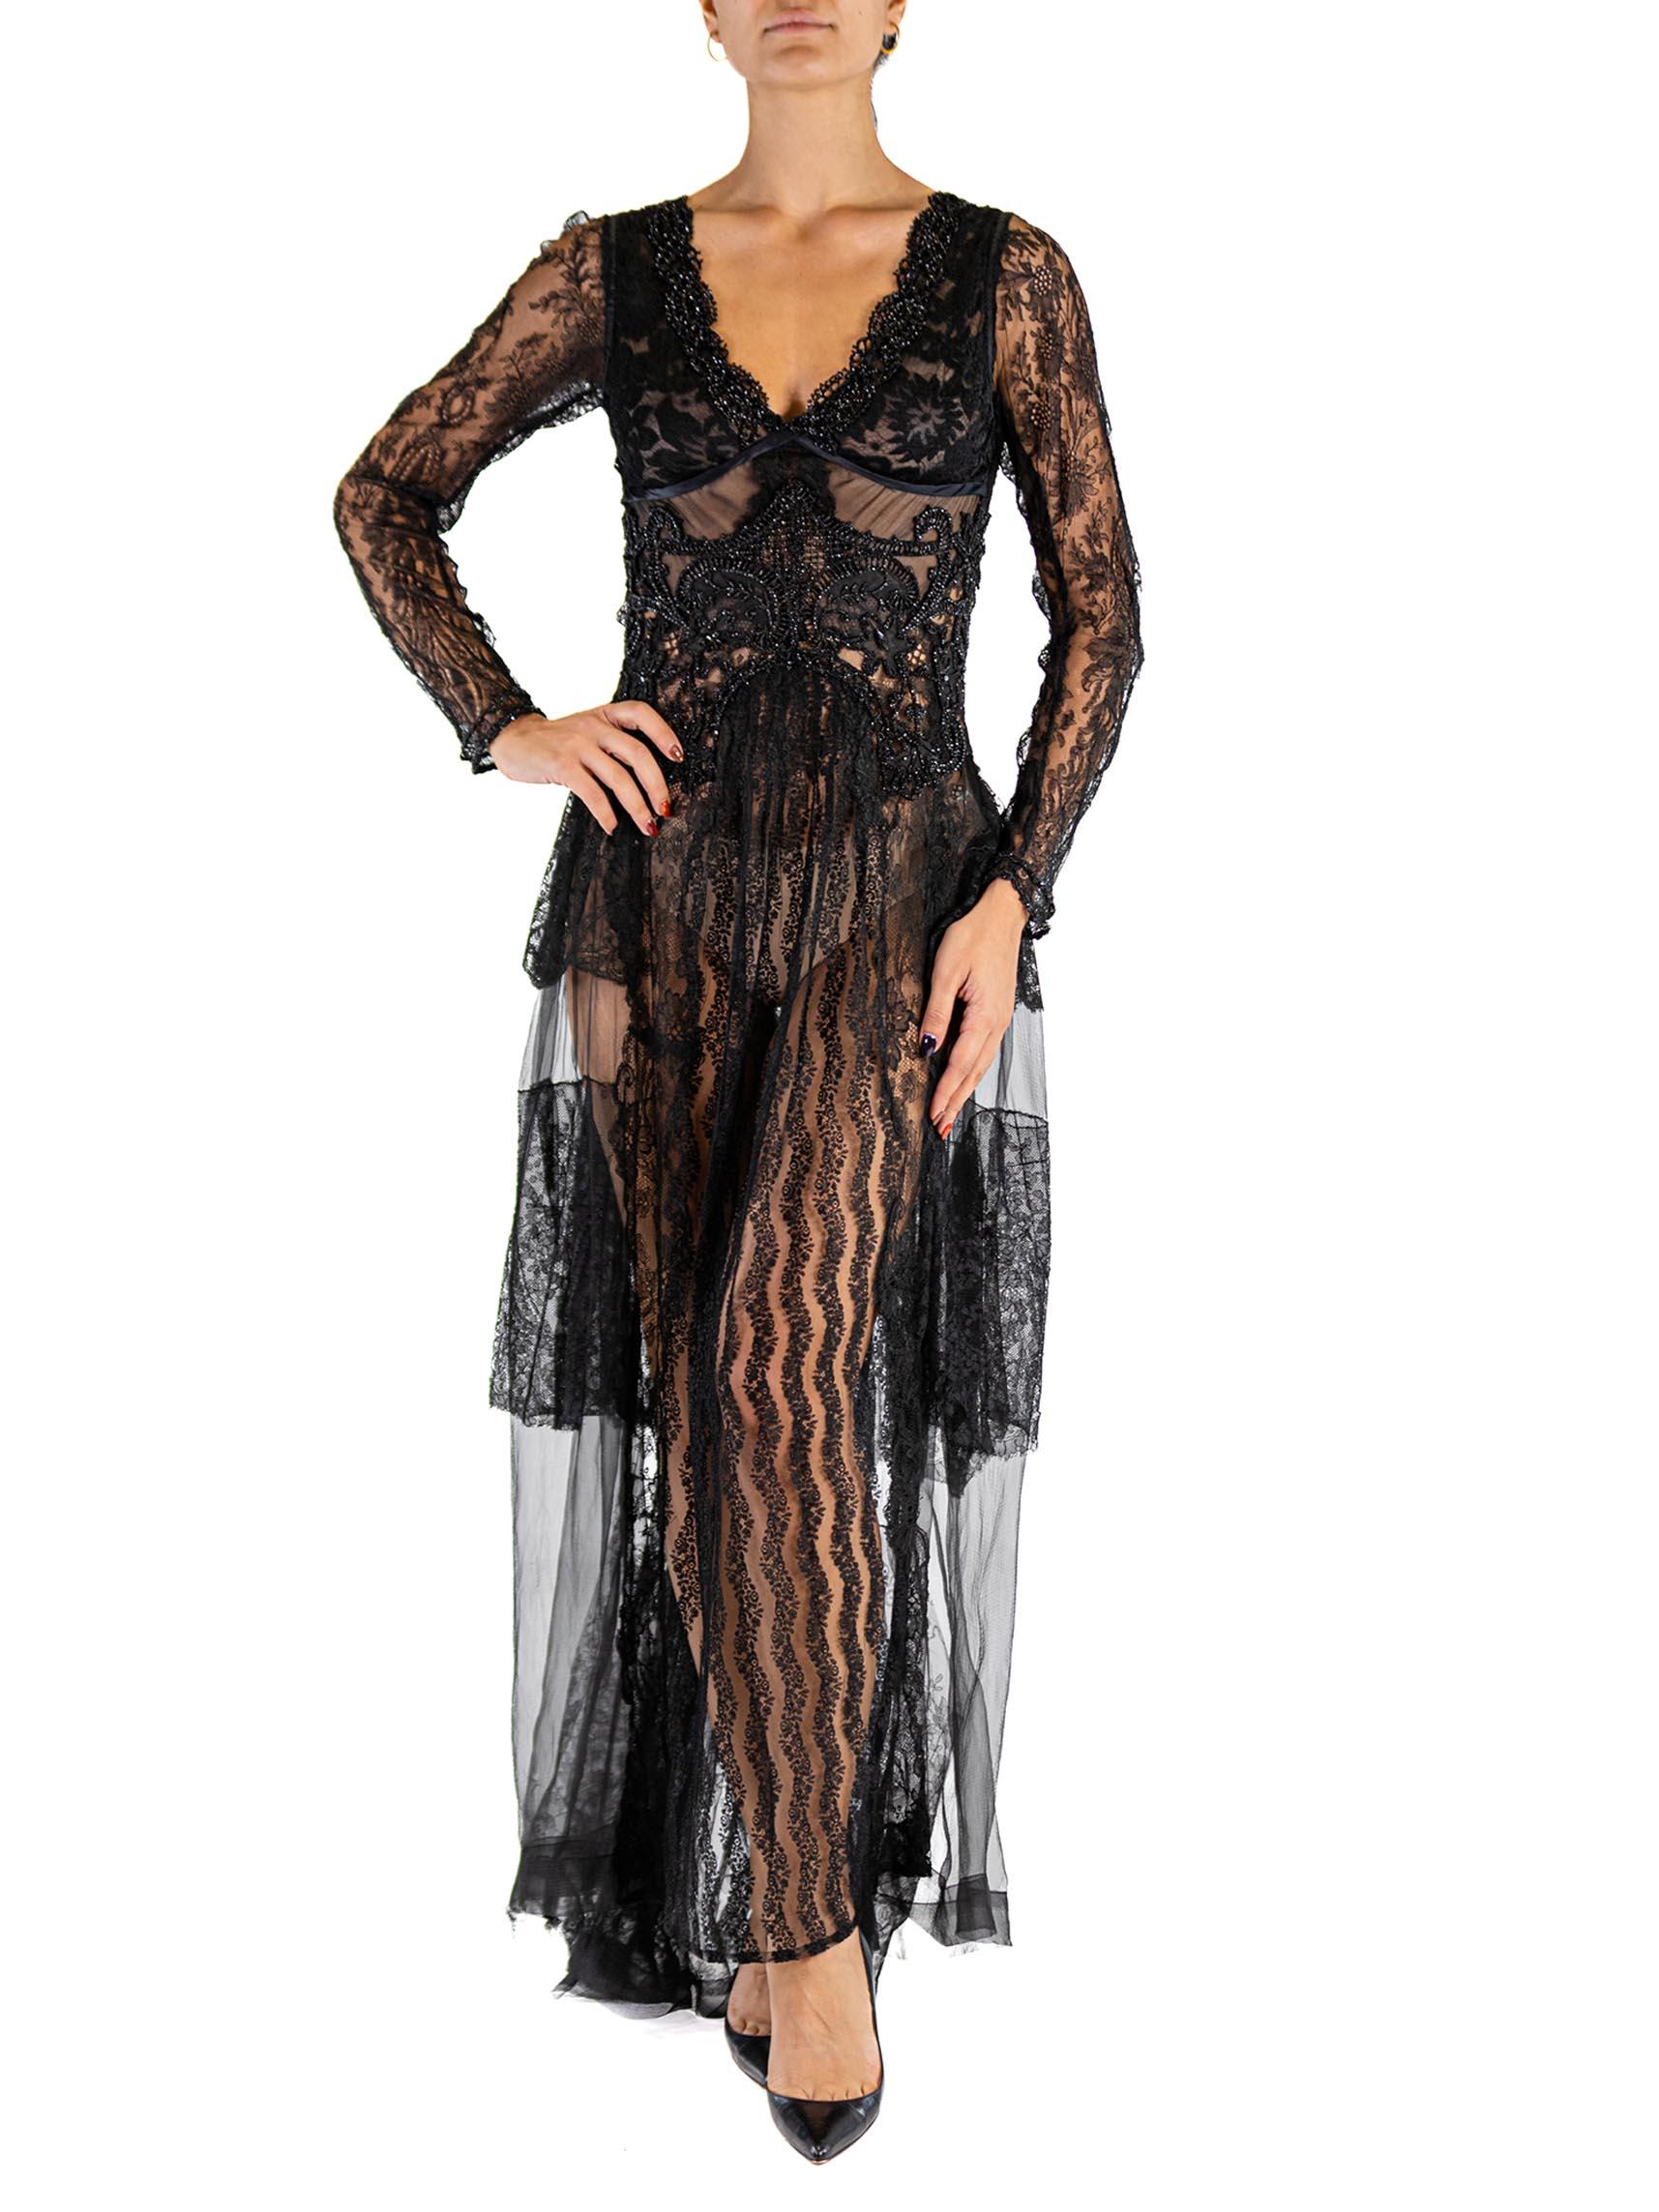 MORPHEW ATELIER Black Antique Lace Victorian Beadwork Gown For Sale 5